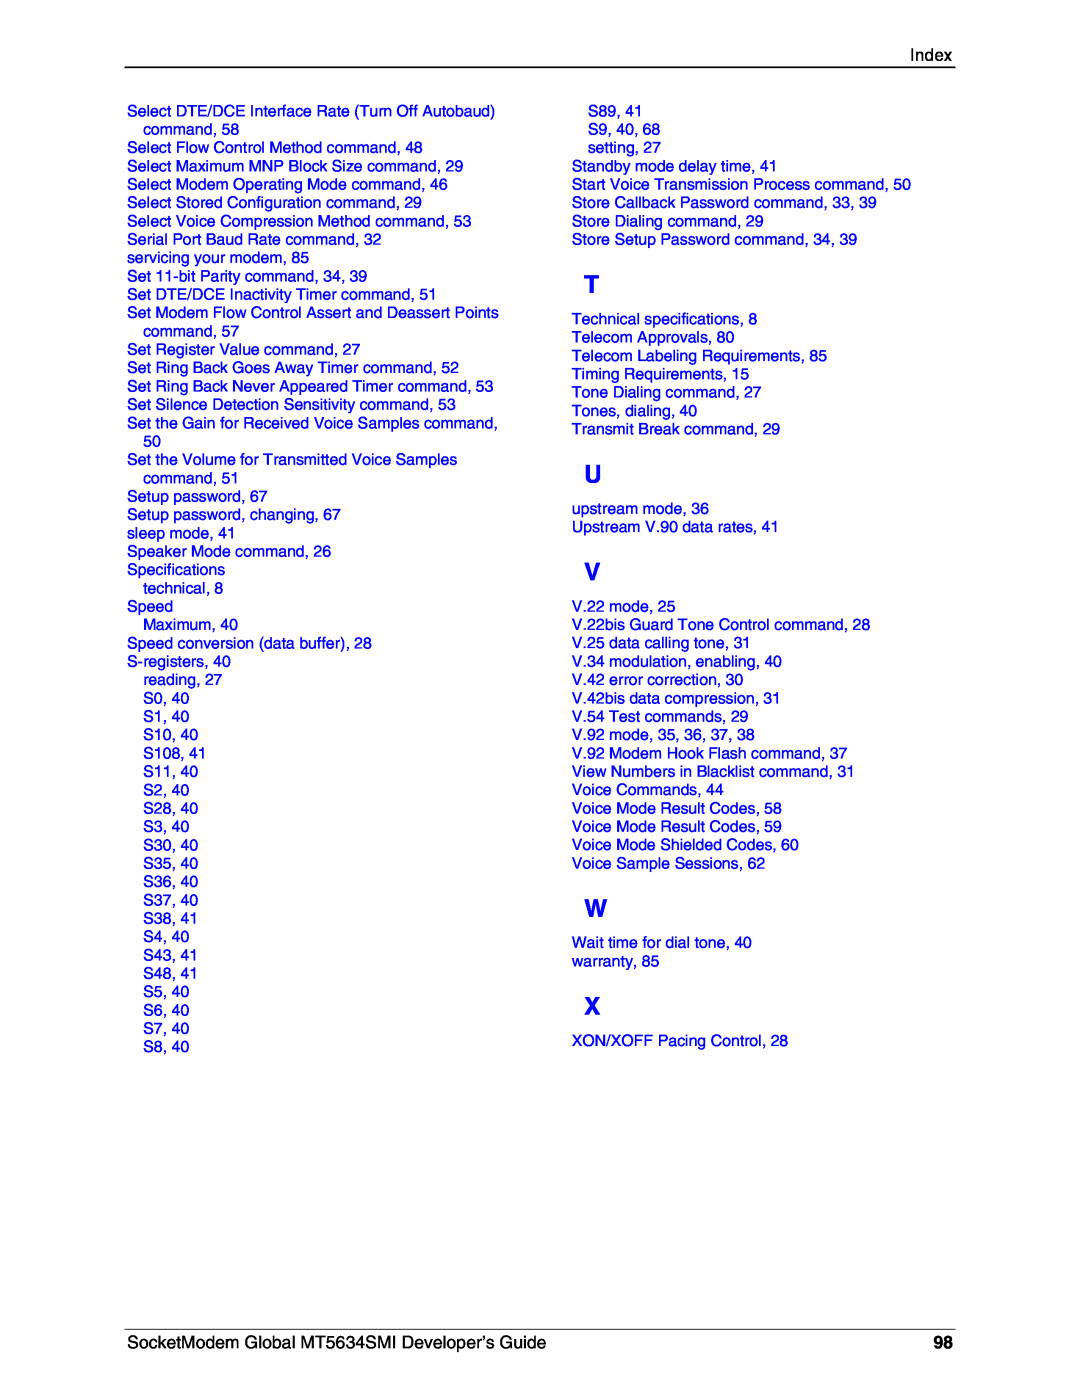 Technics MT5634SMI-92, MT5634SMI-34 manual Index, SocketModem Global MT5634SMI Developer’s Guide 